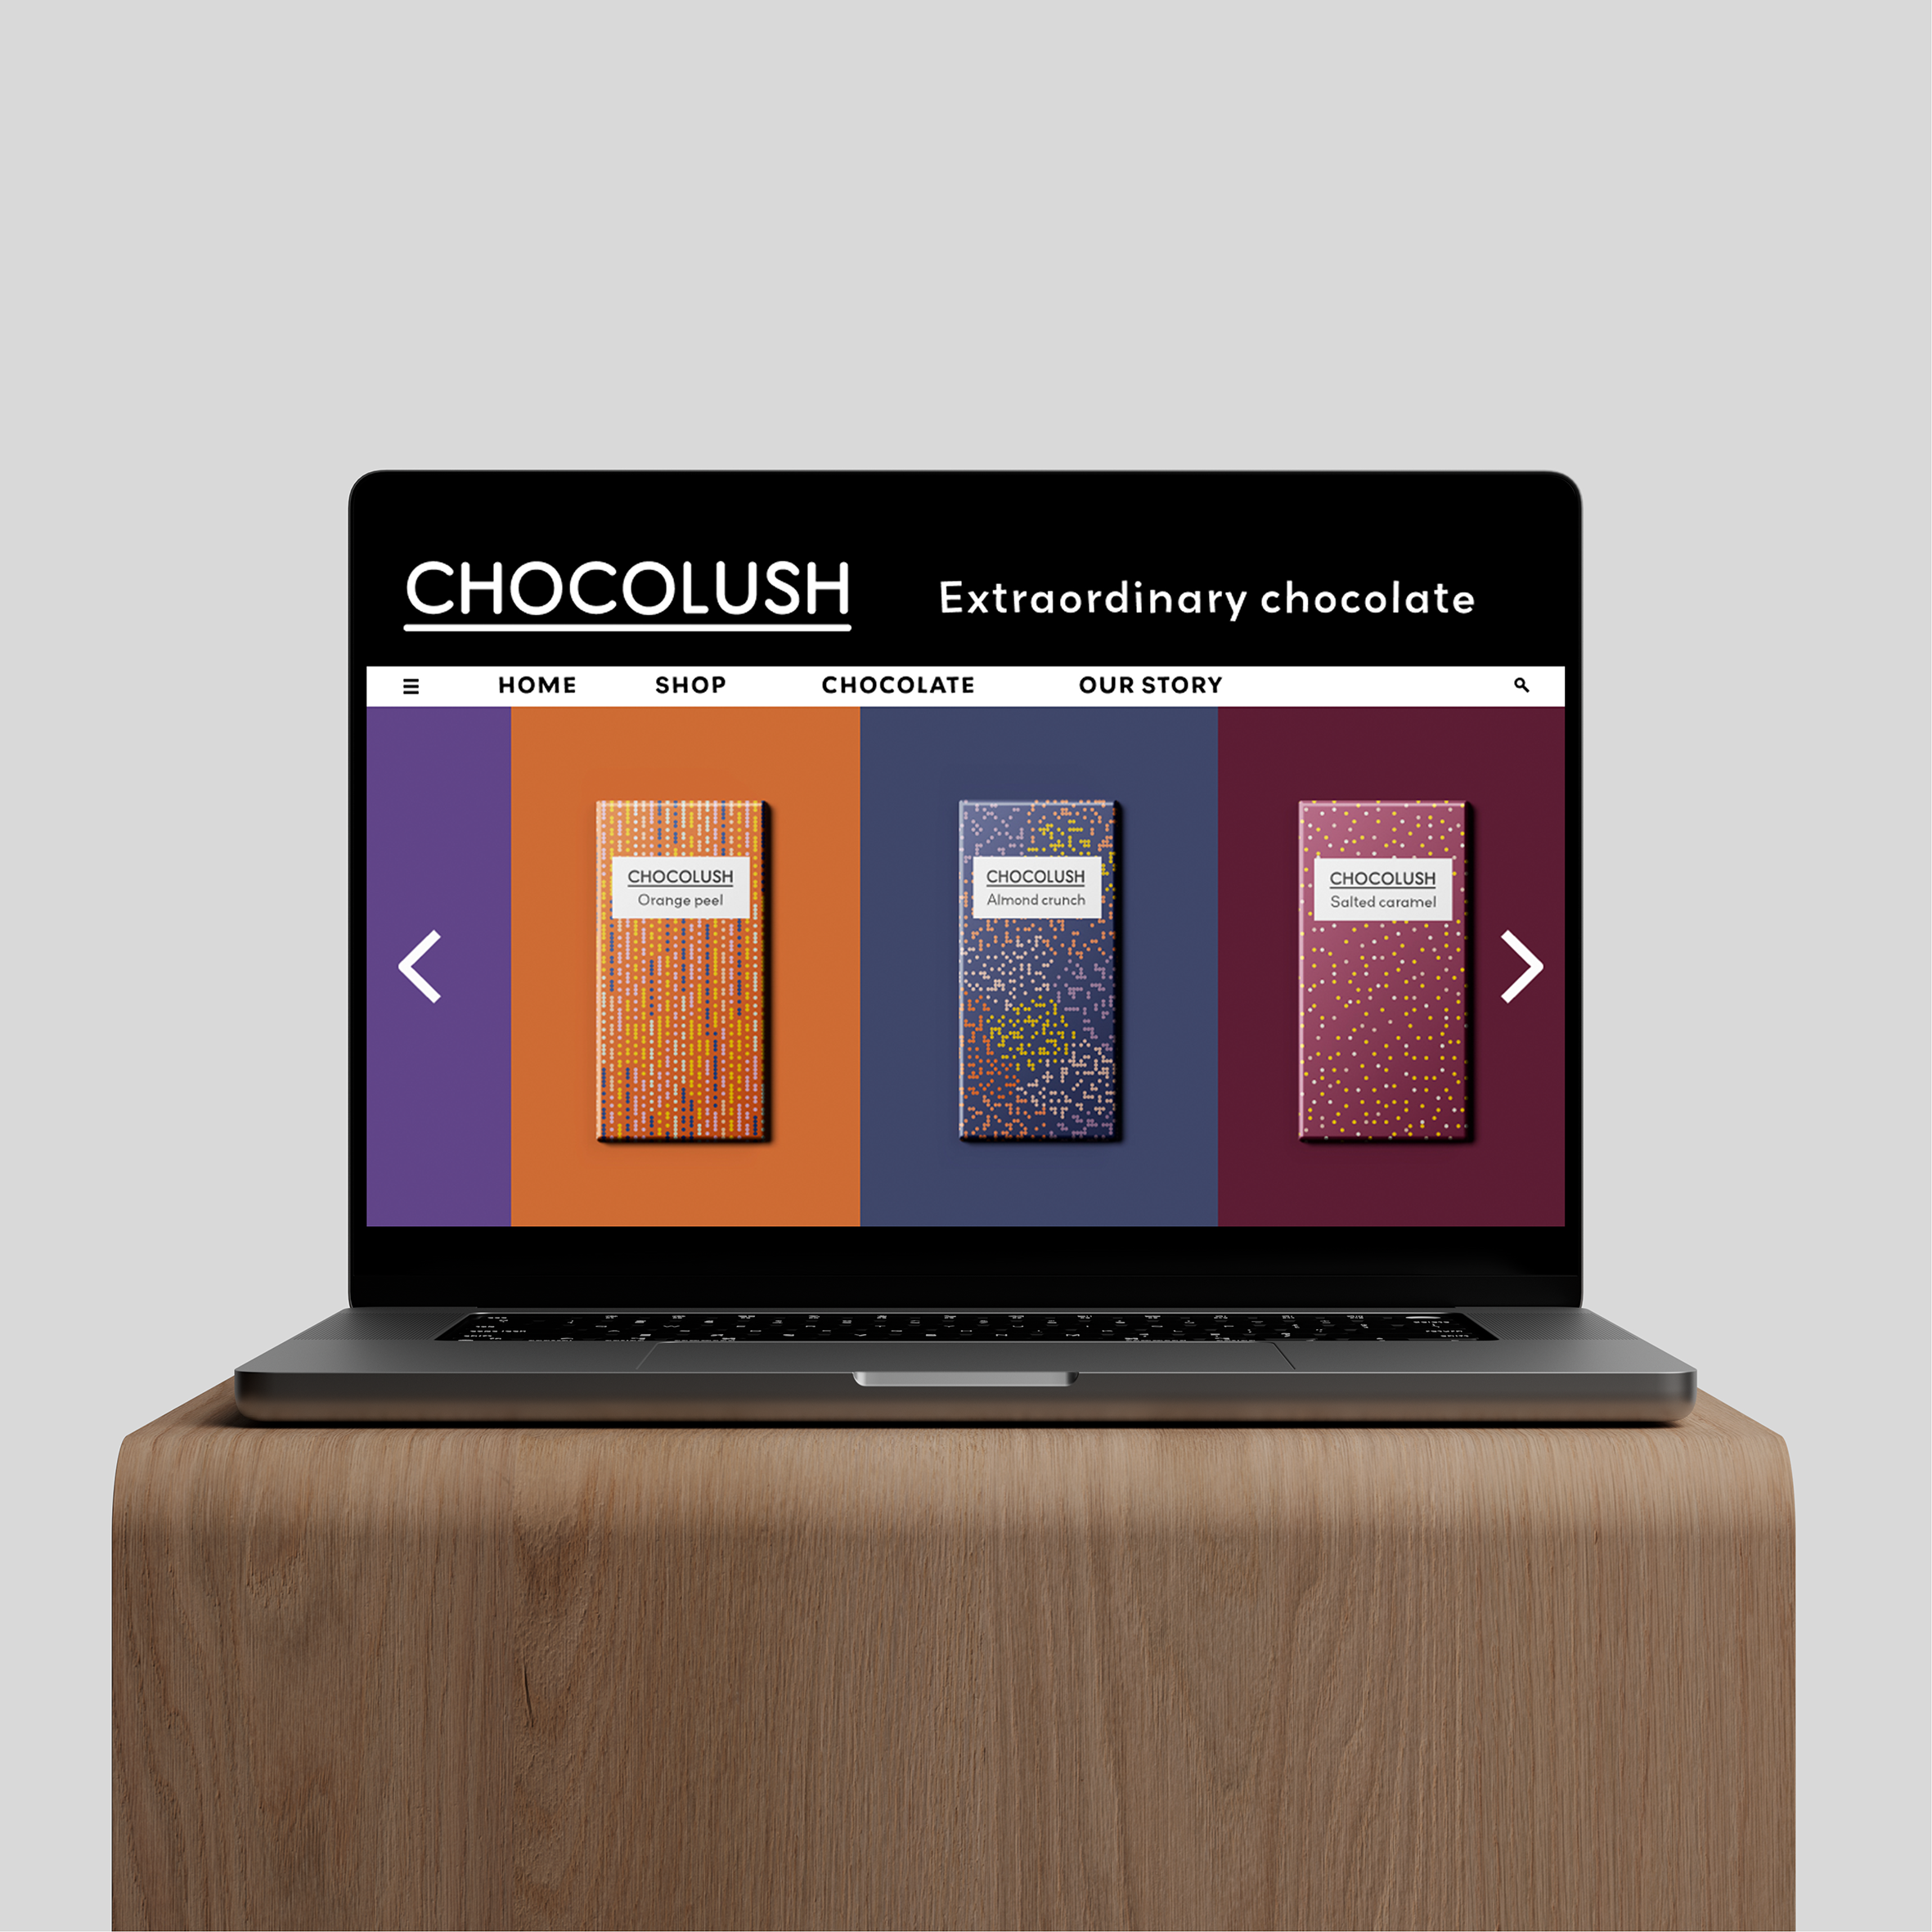 Chocolush. Extraordinary chocolate by Irene Cantero Moreno - Creative Work - $i